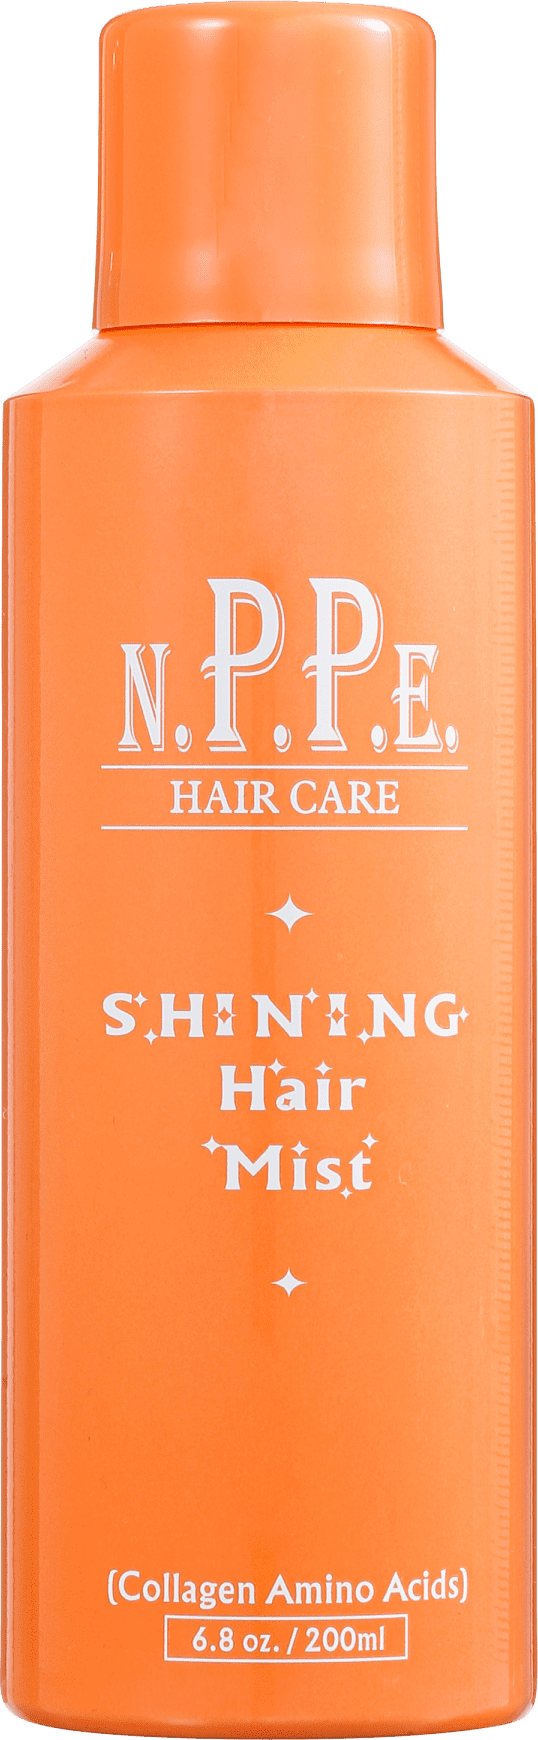 0652418400073 - SHINING HAIR MIST NPPE - SPRAY DE BRILHO - 200ML